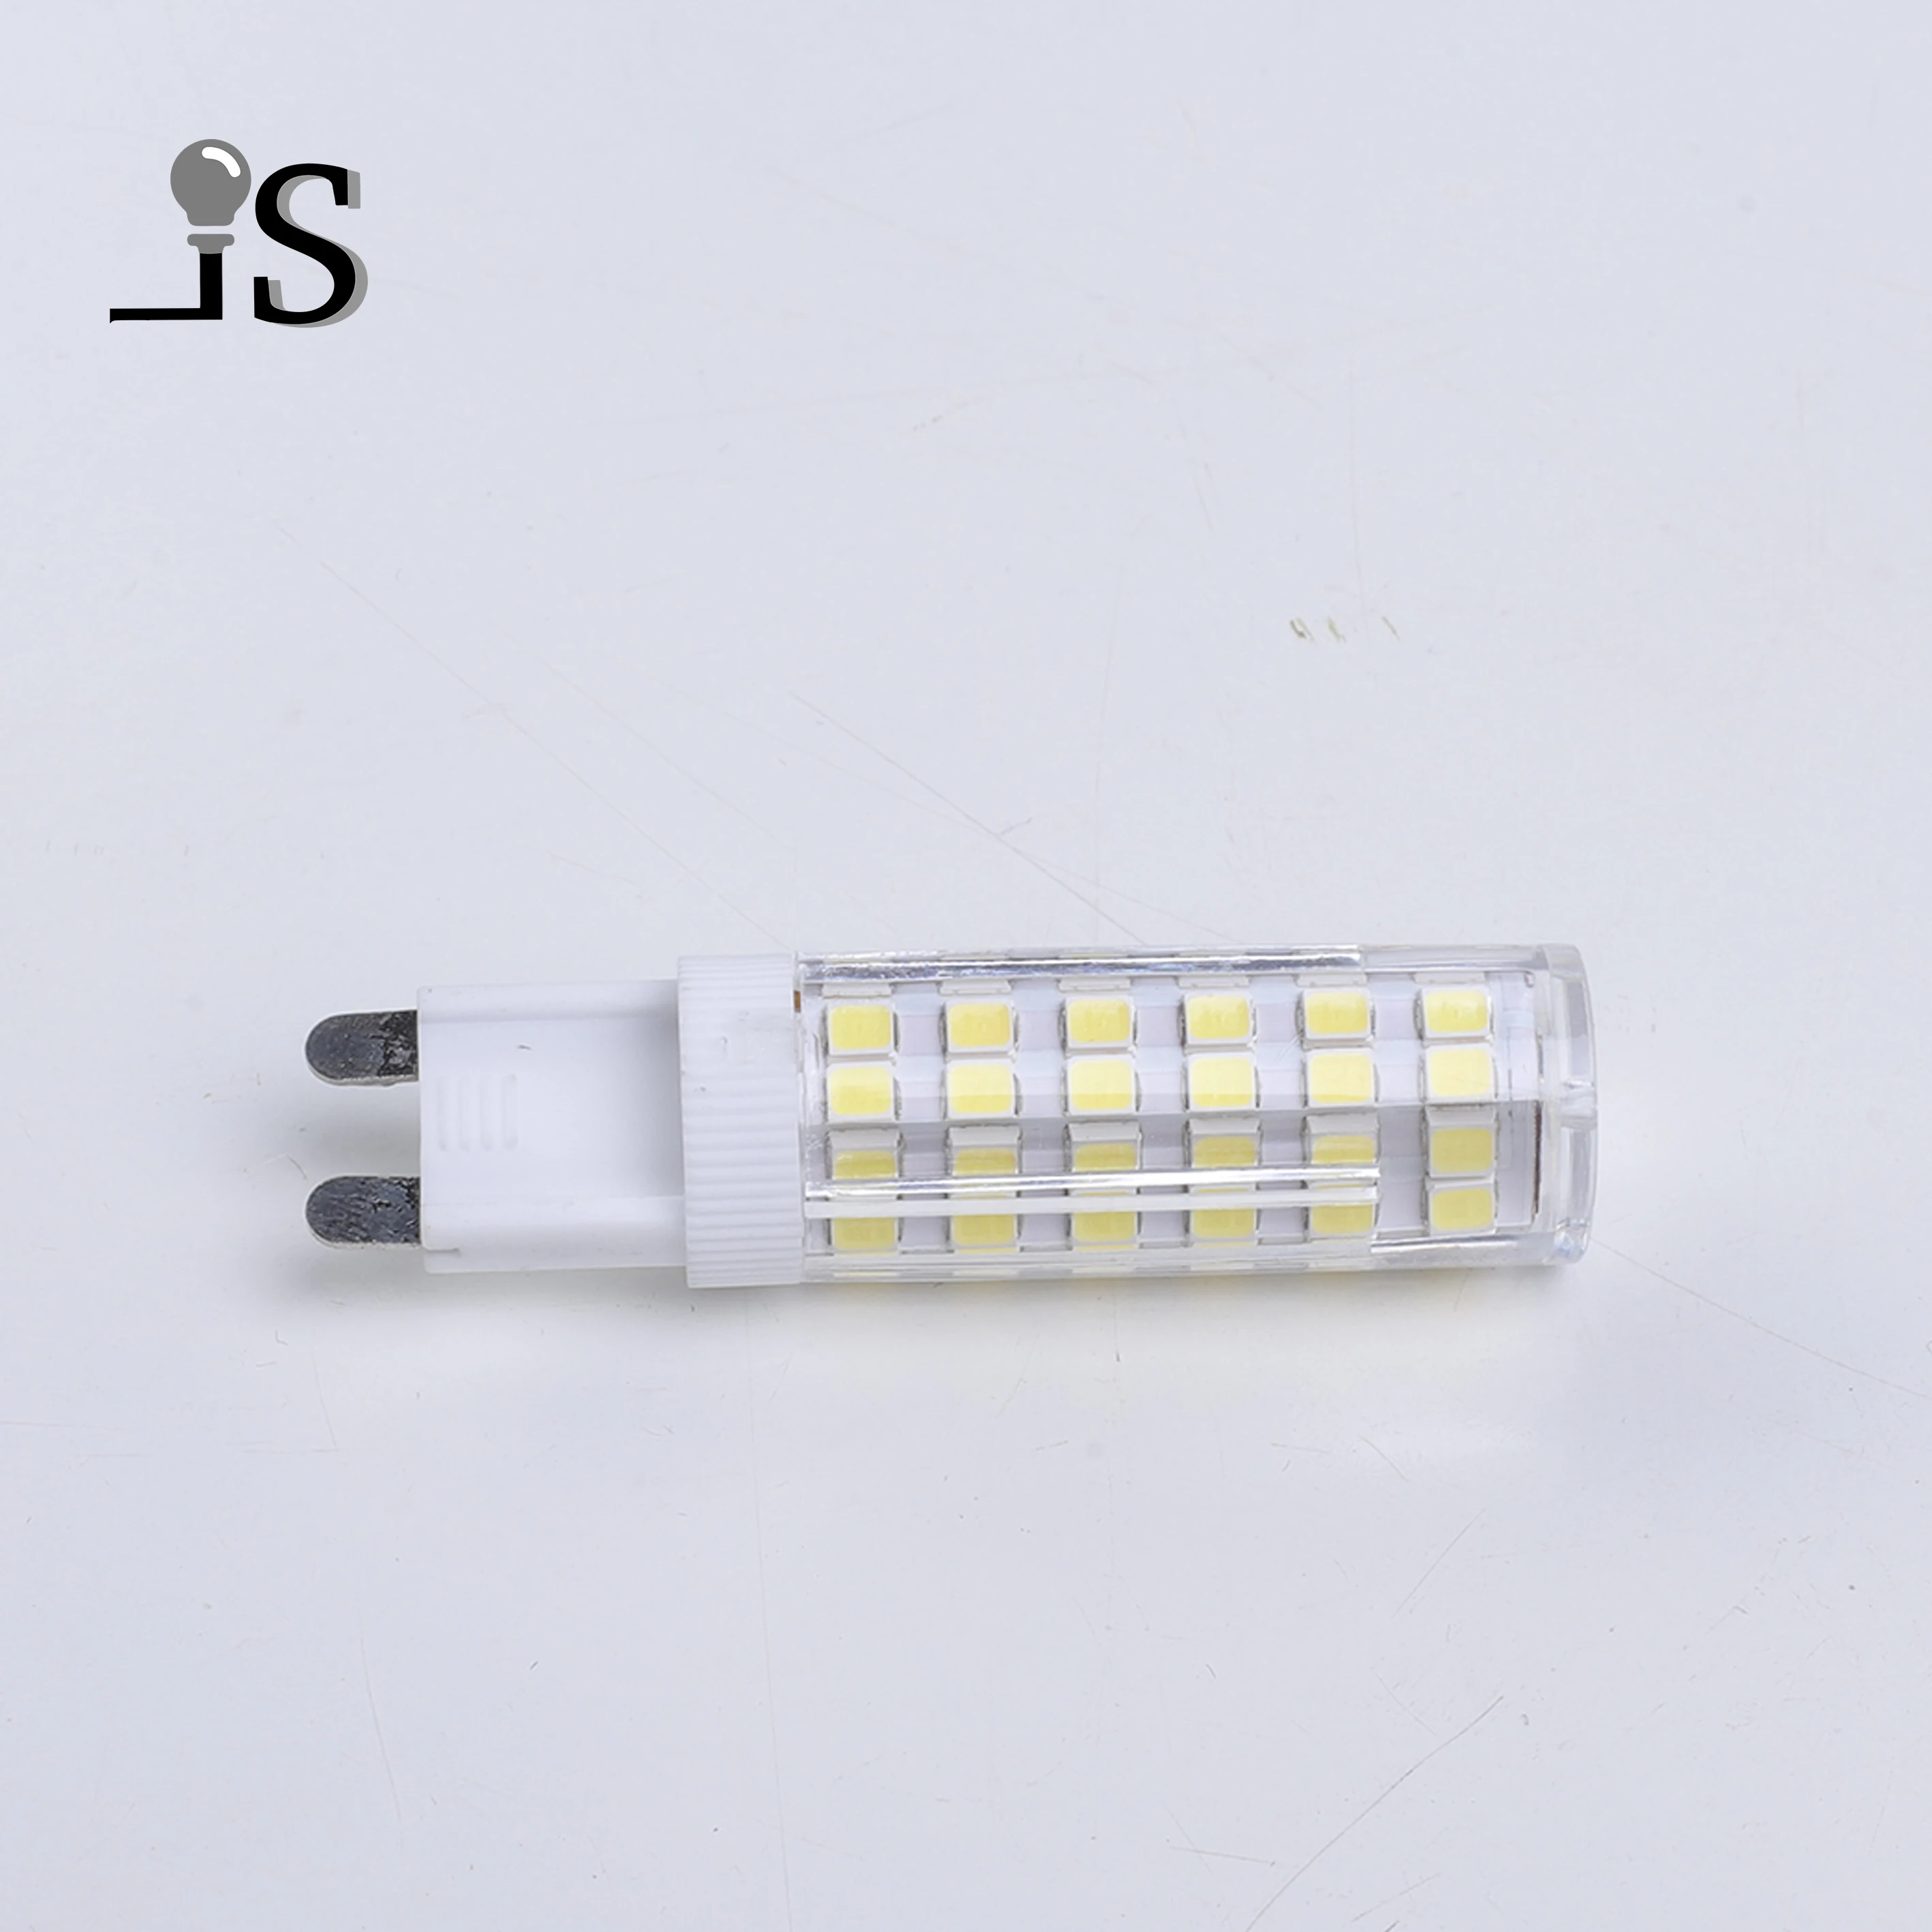 China LED Bulb 3W 5W G4 G9 Light Bulb AC 220V DC 12V LED Lamp SMD2835 Spotlight Chandelier Lighting Replace Halogen Lamps